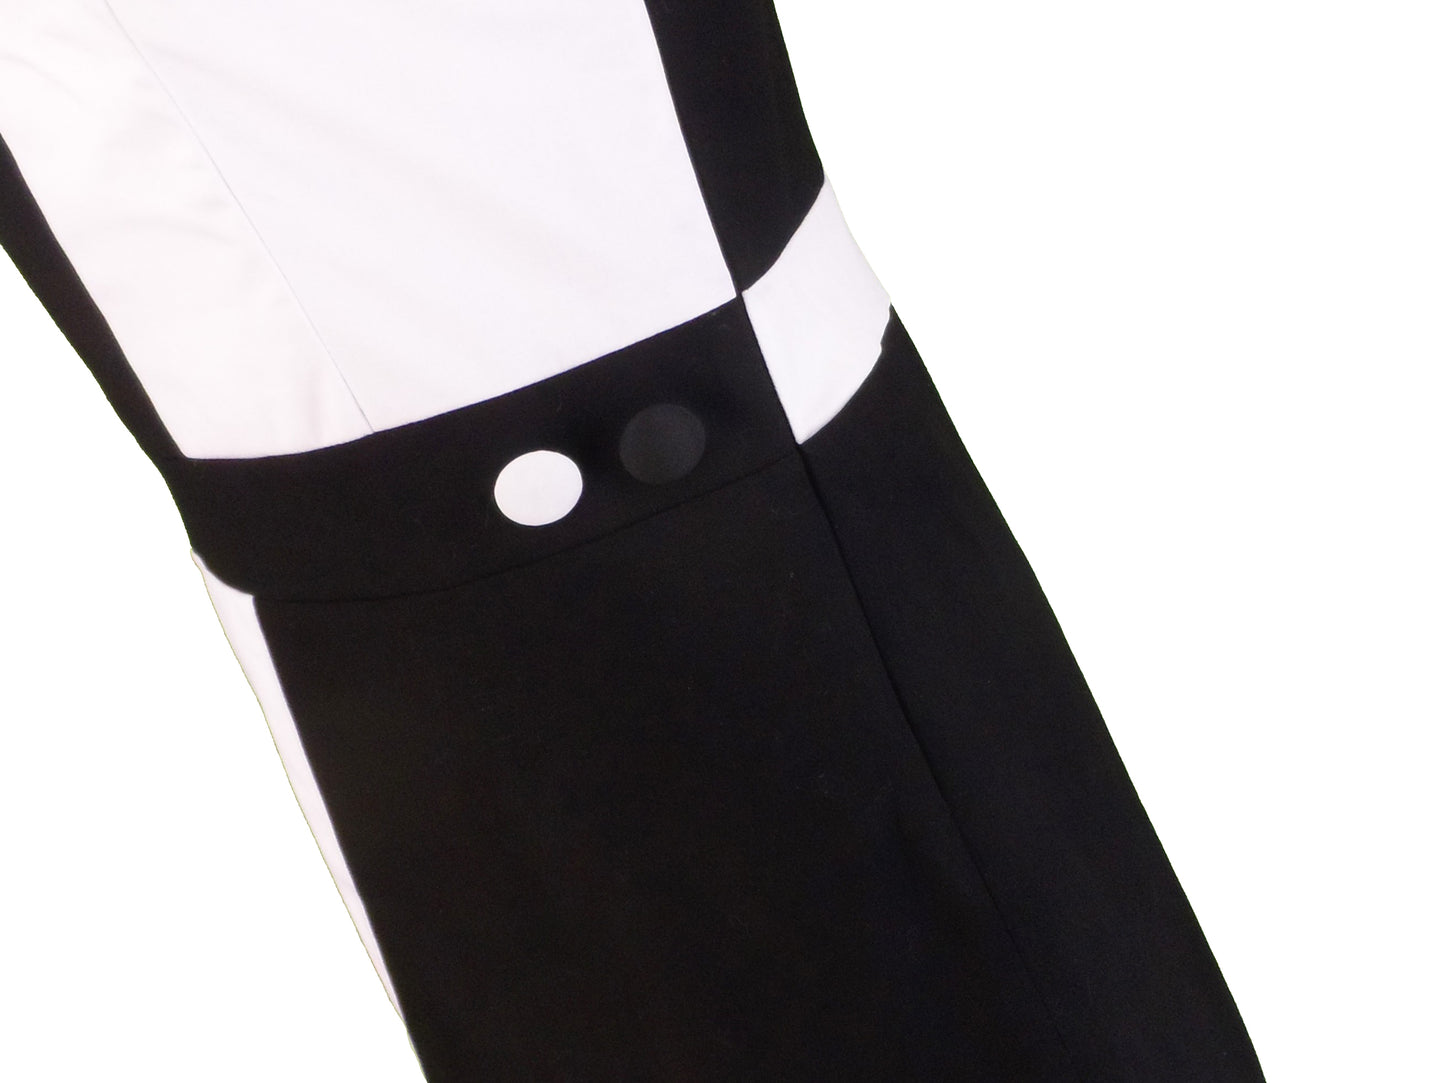 Mazeys Ladies 60s Retro Mod Vintage Black & White Quadrant Dress